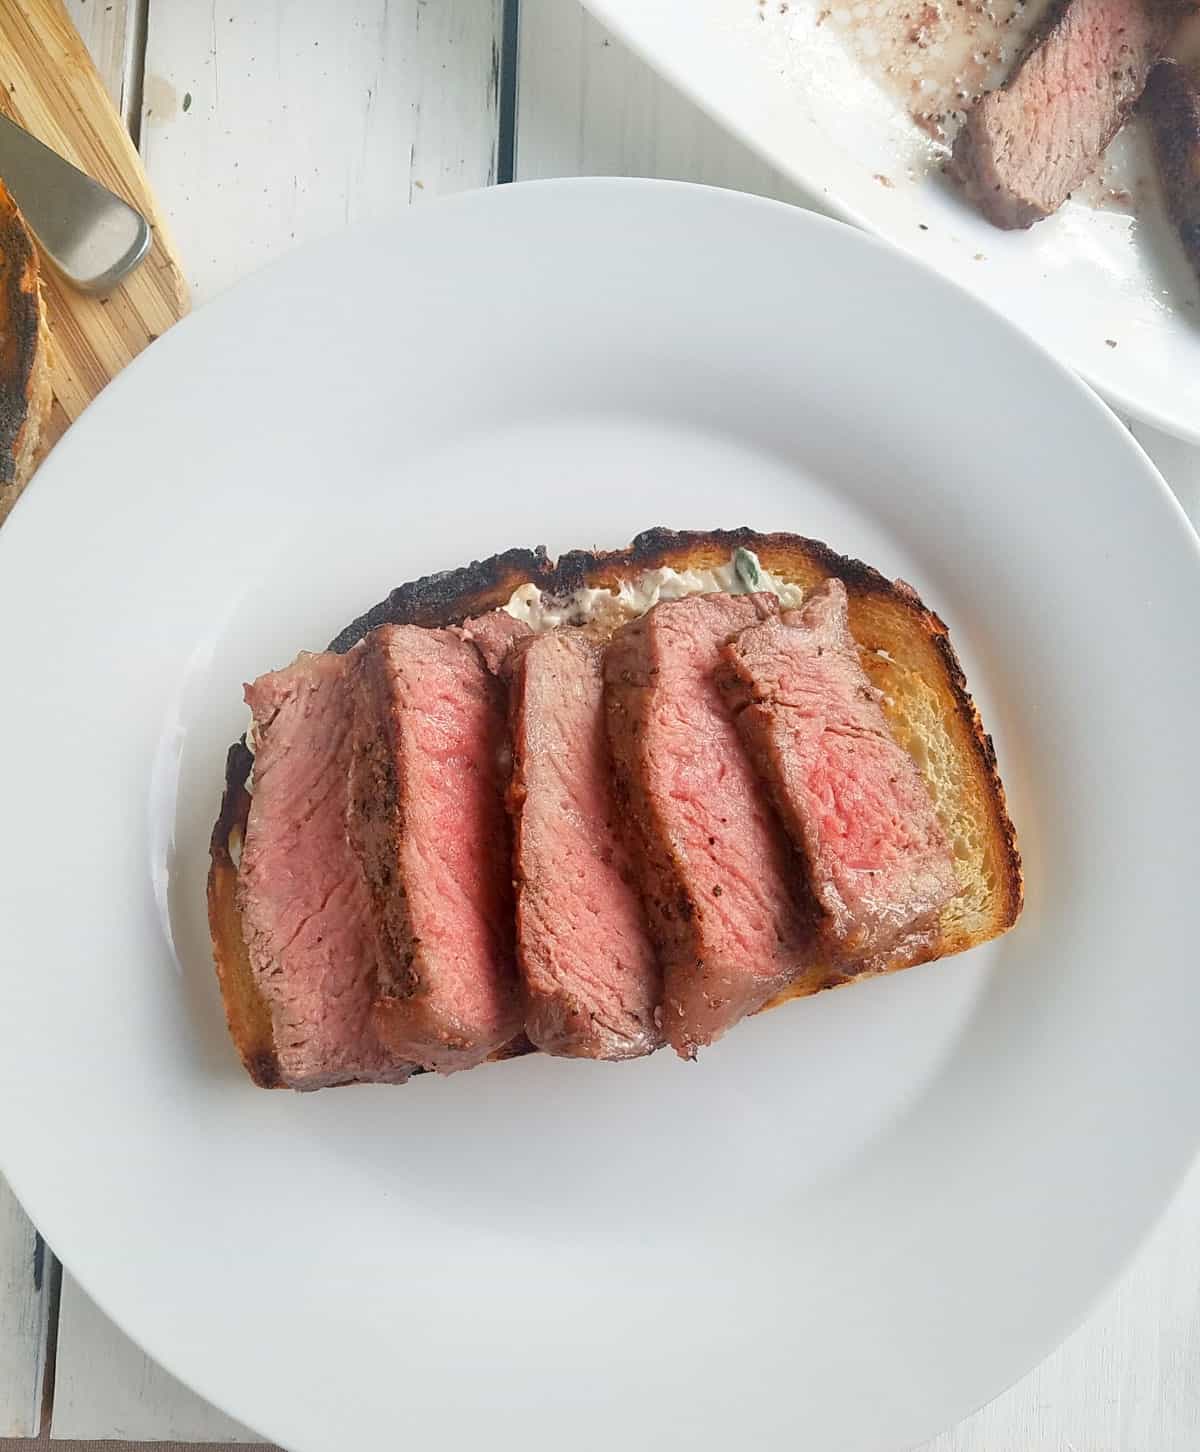 sliced steak on grilled bread.